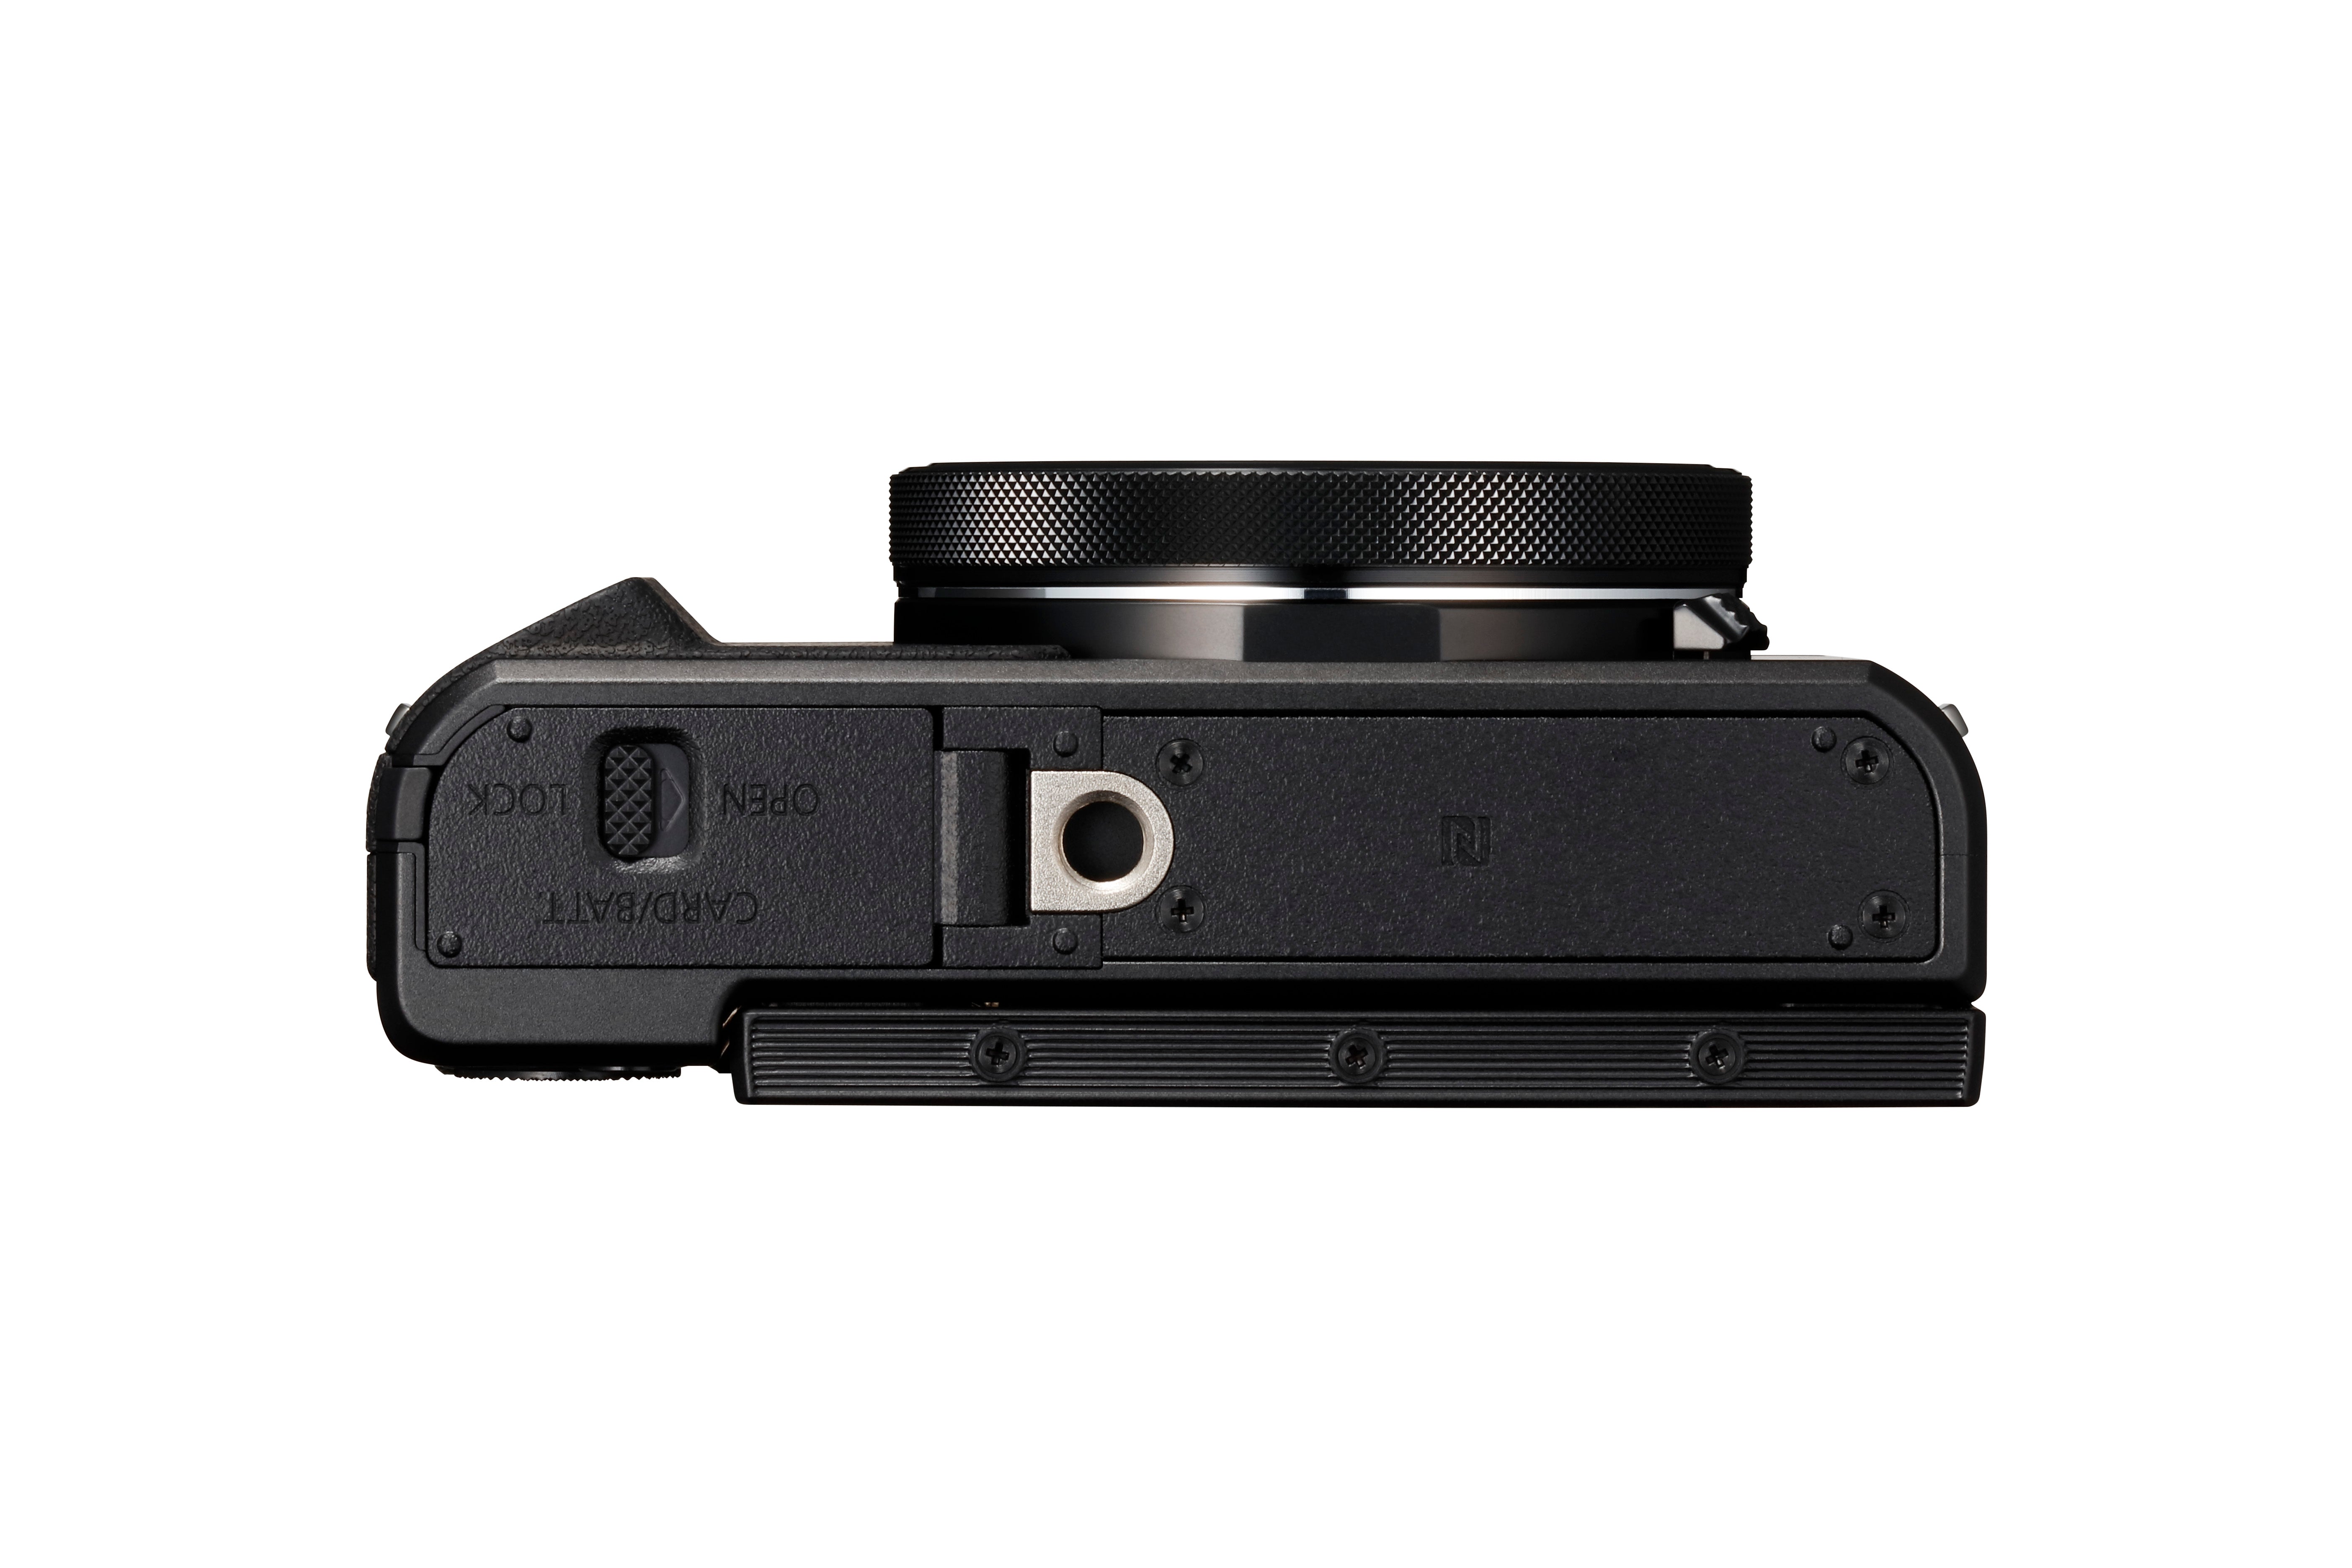 Canon Powershot G7 X Mark II Camera numérique